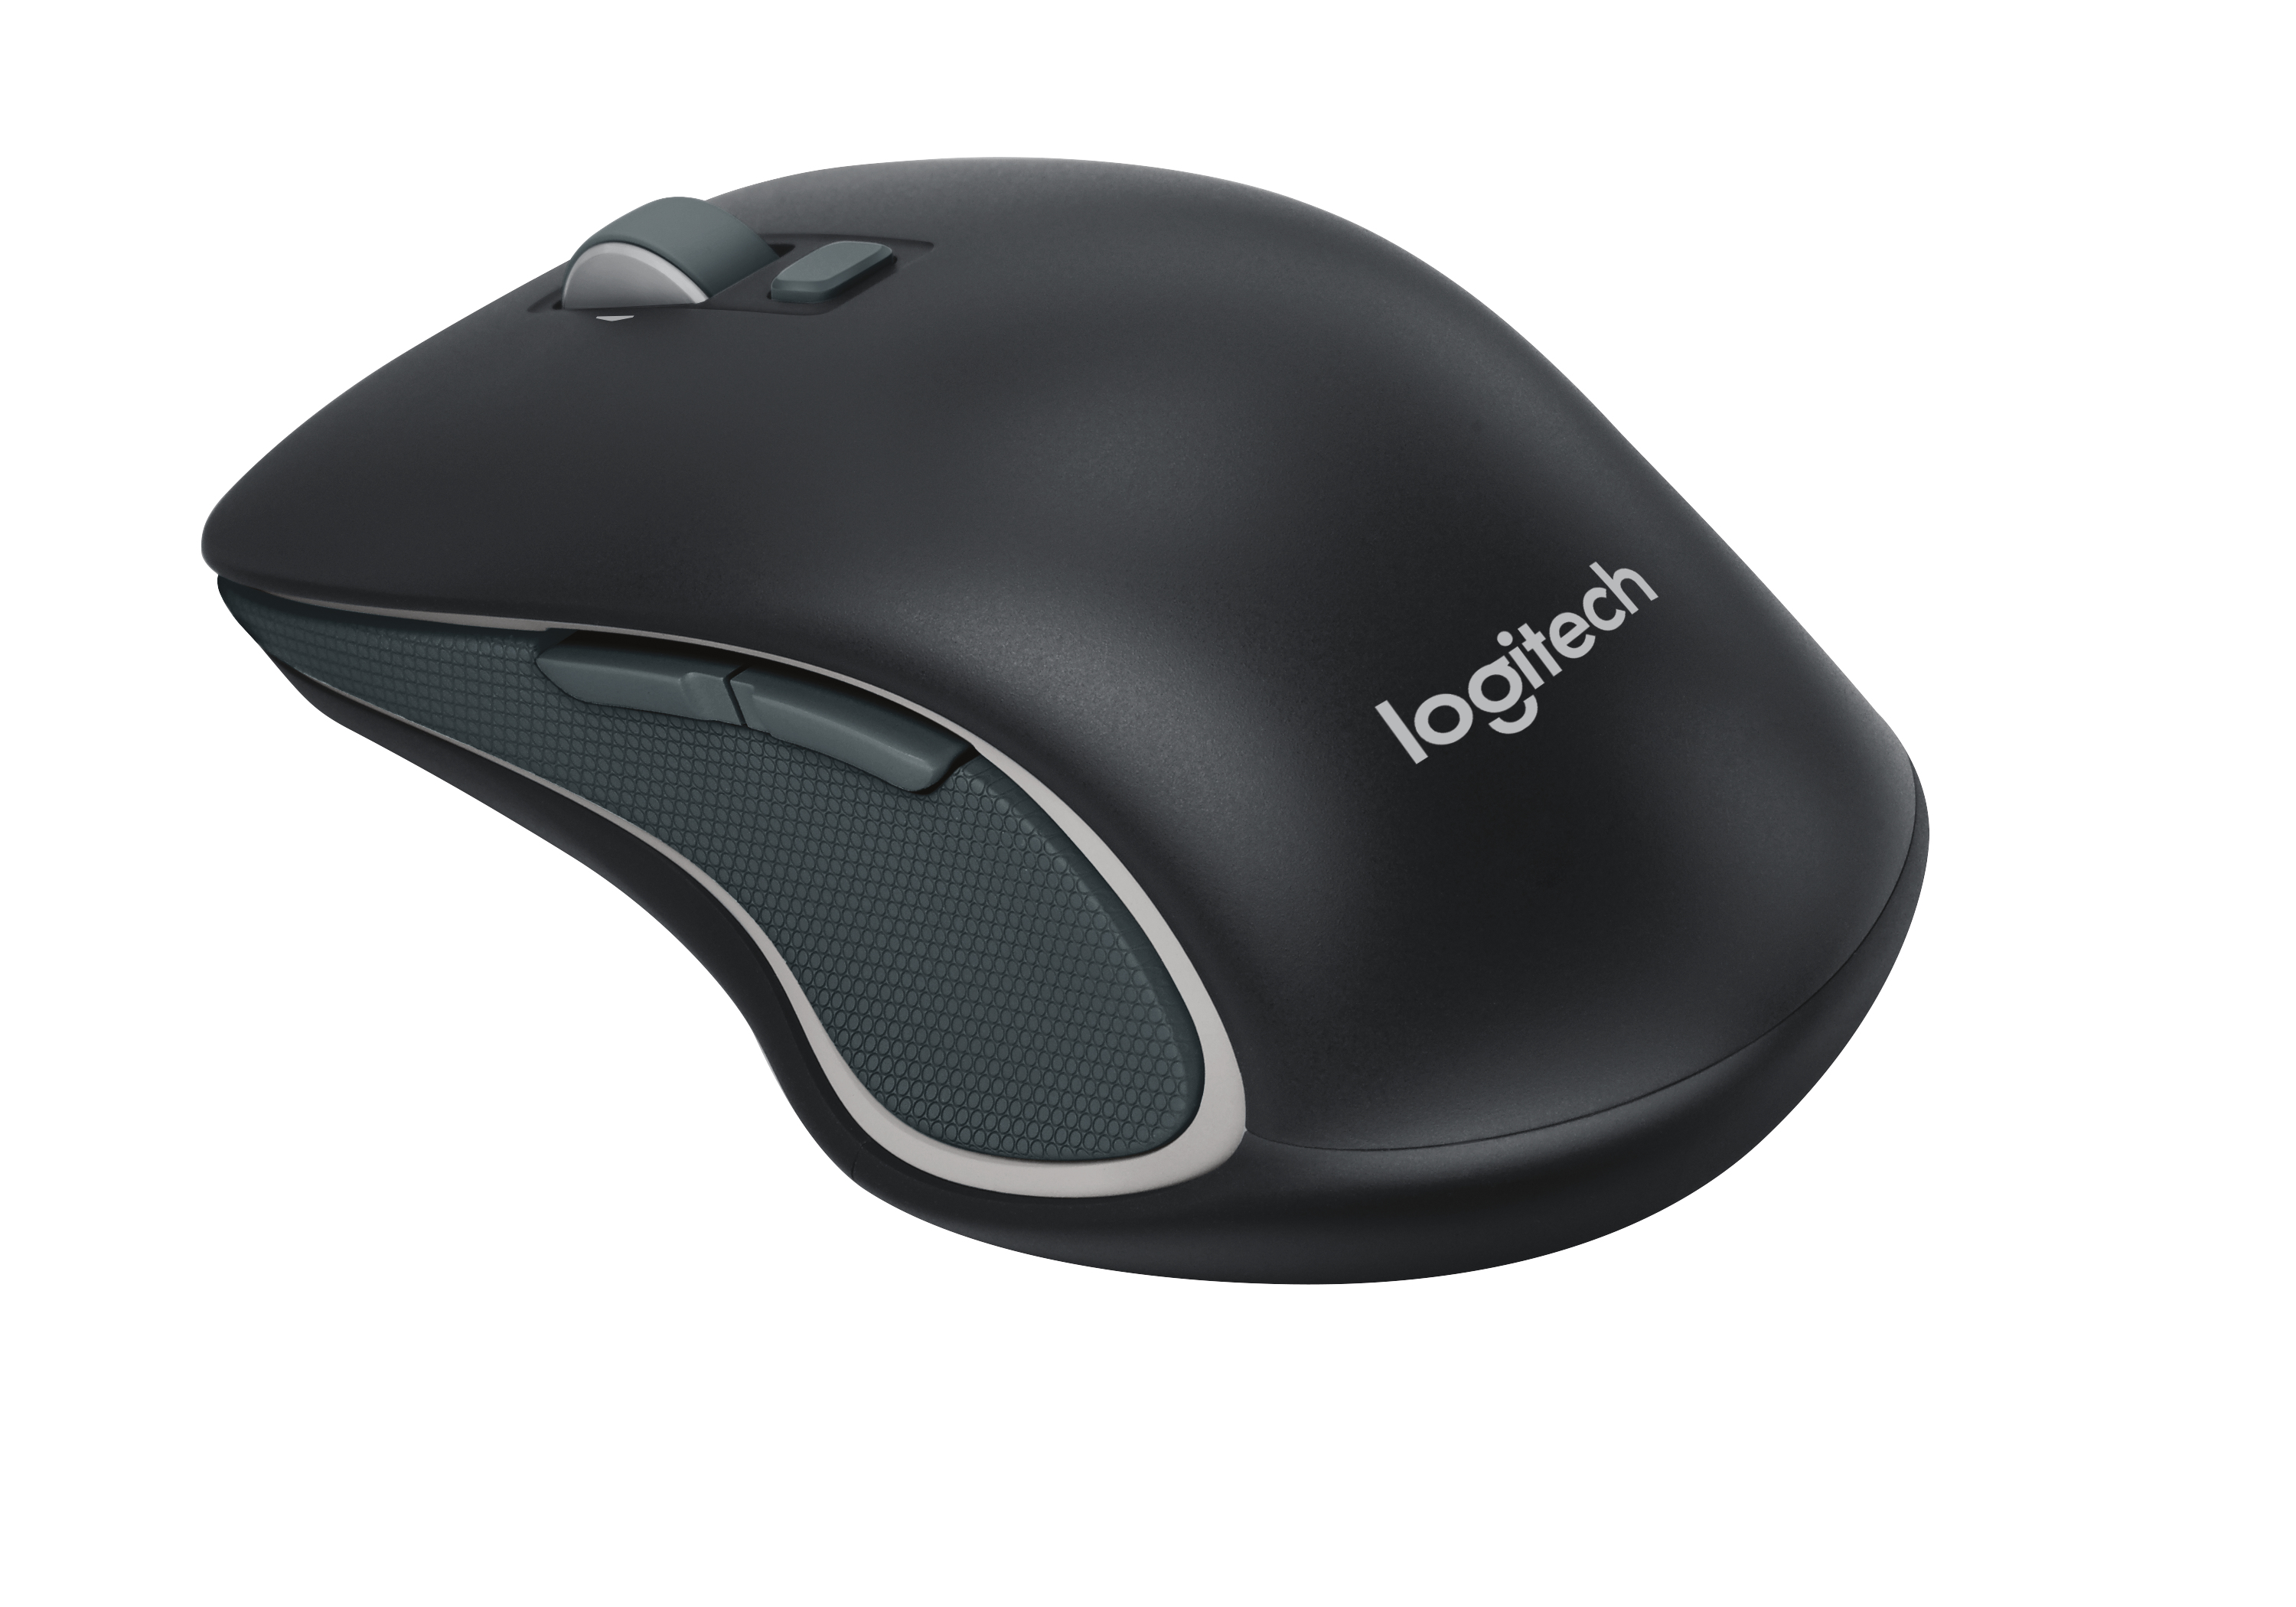 Logitech 910-003882 M560 Wireless Mouse Black